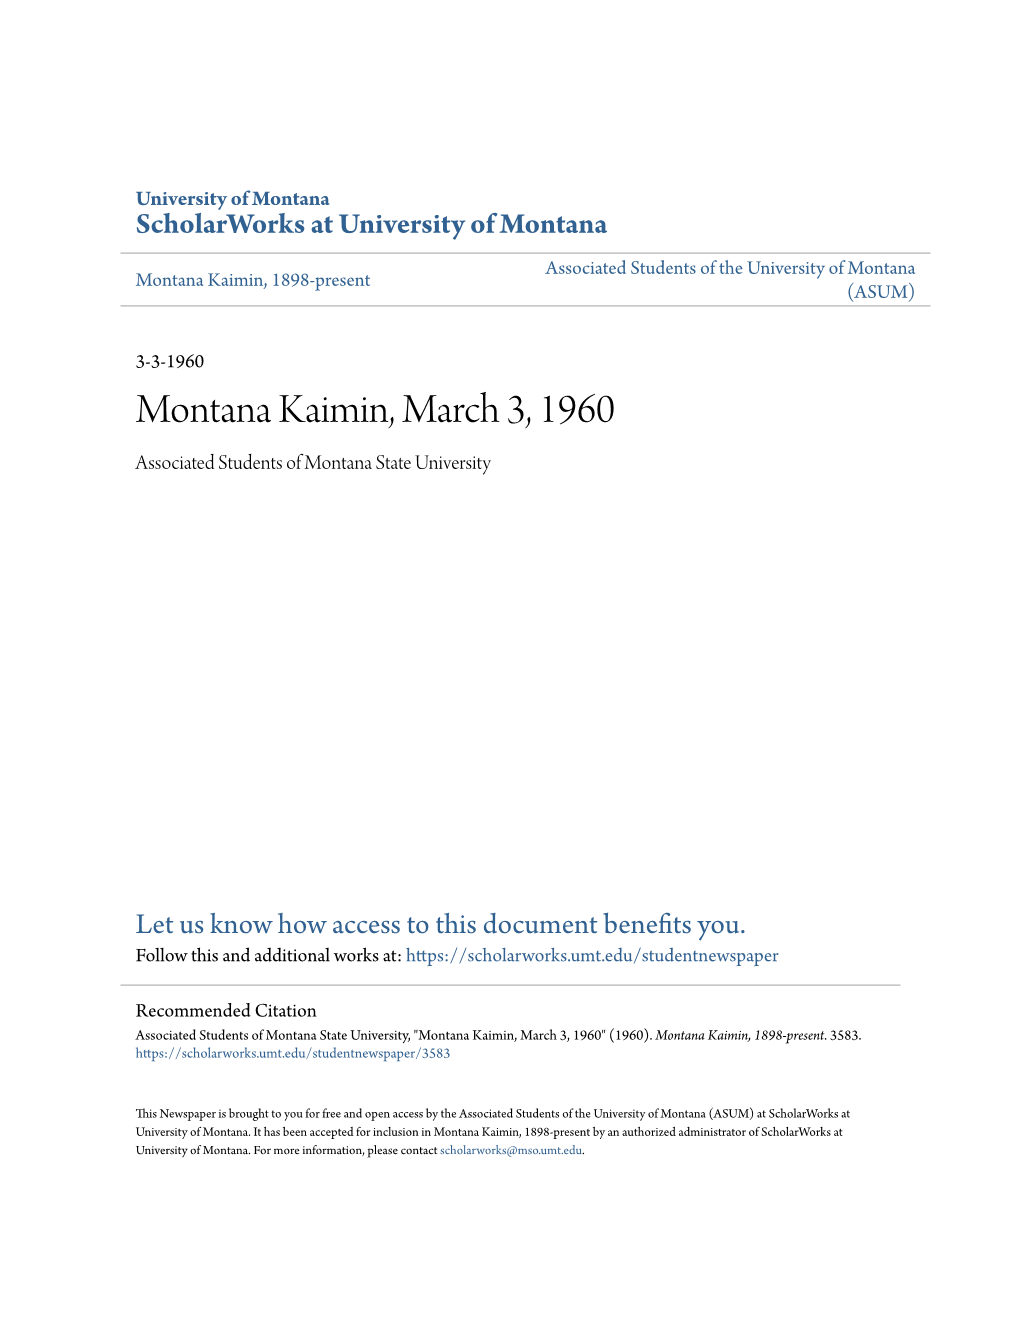 Montana Kaimin, March 3, 1960 Associated Students of Montana State University